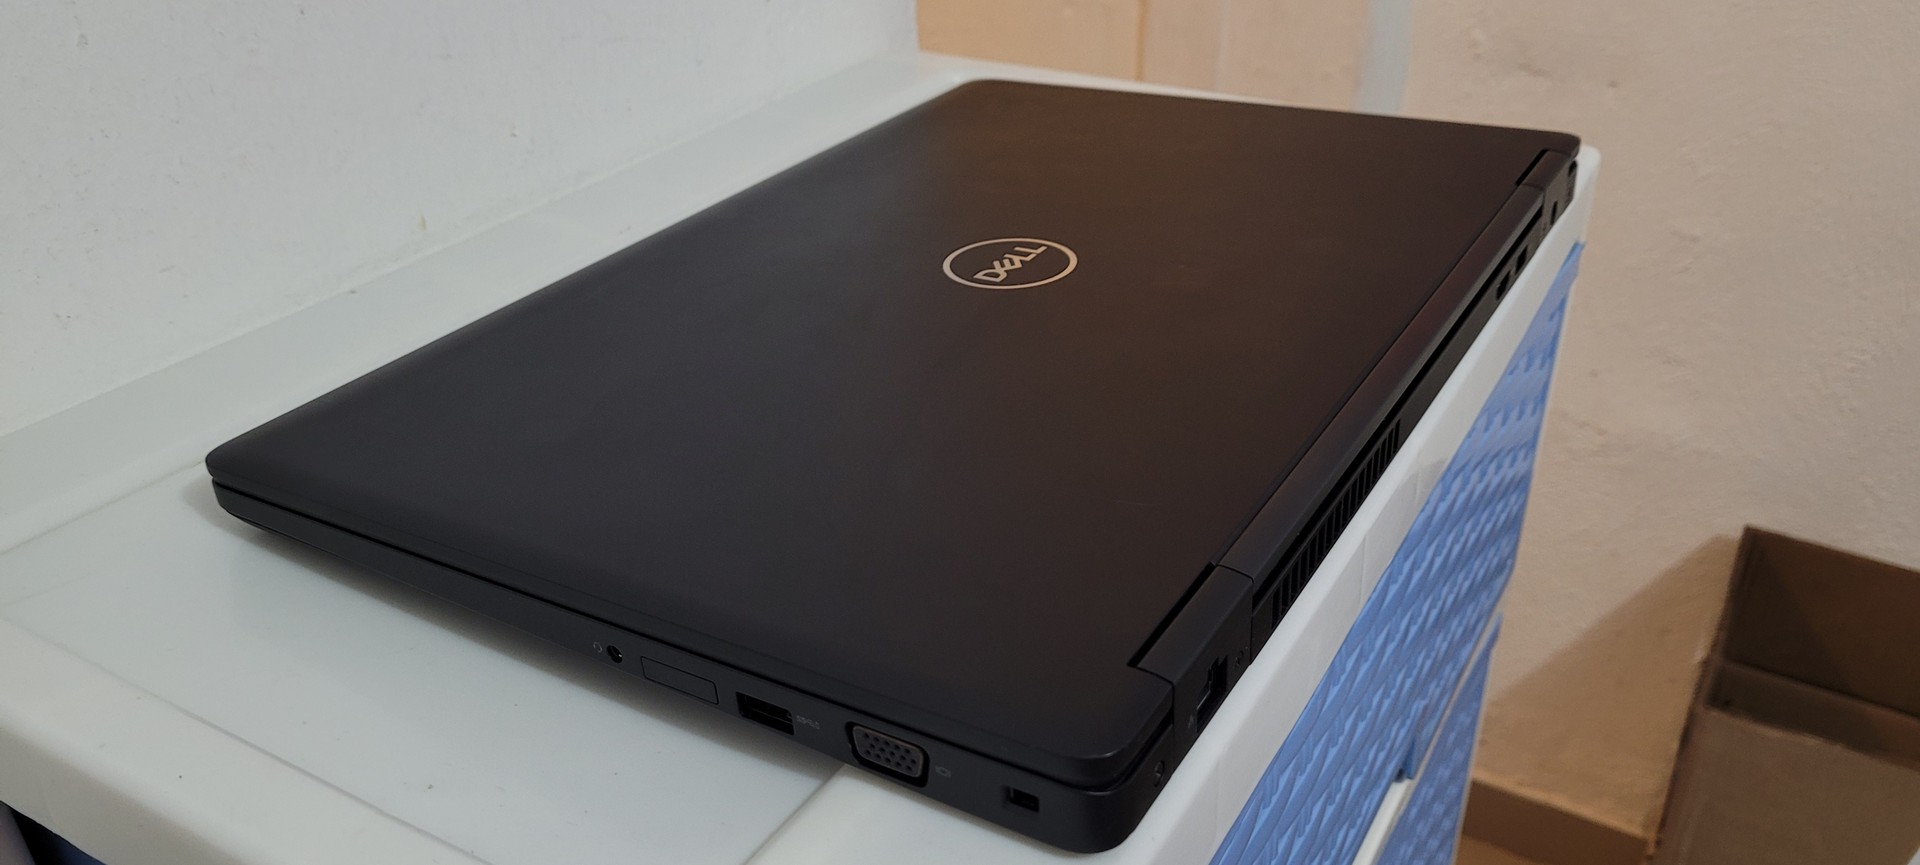 computadoras y laptops - Dell 5580 17 Pulg Core i5 7ma Gen Ram 16gb Disco 256gb SSD Video 8gb Nvidea 6gb 2